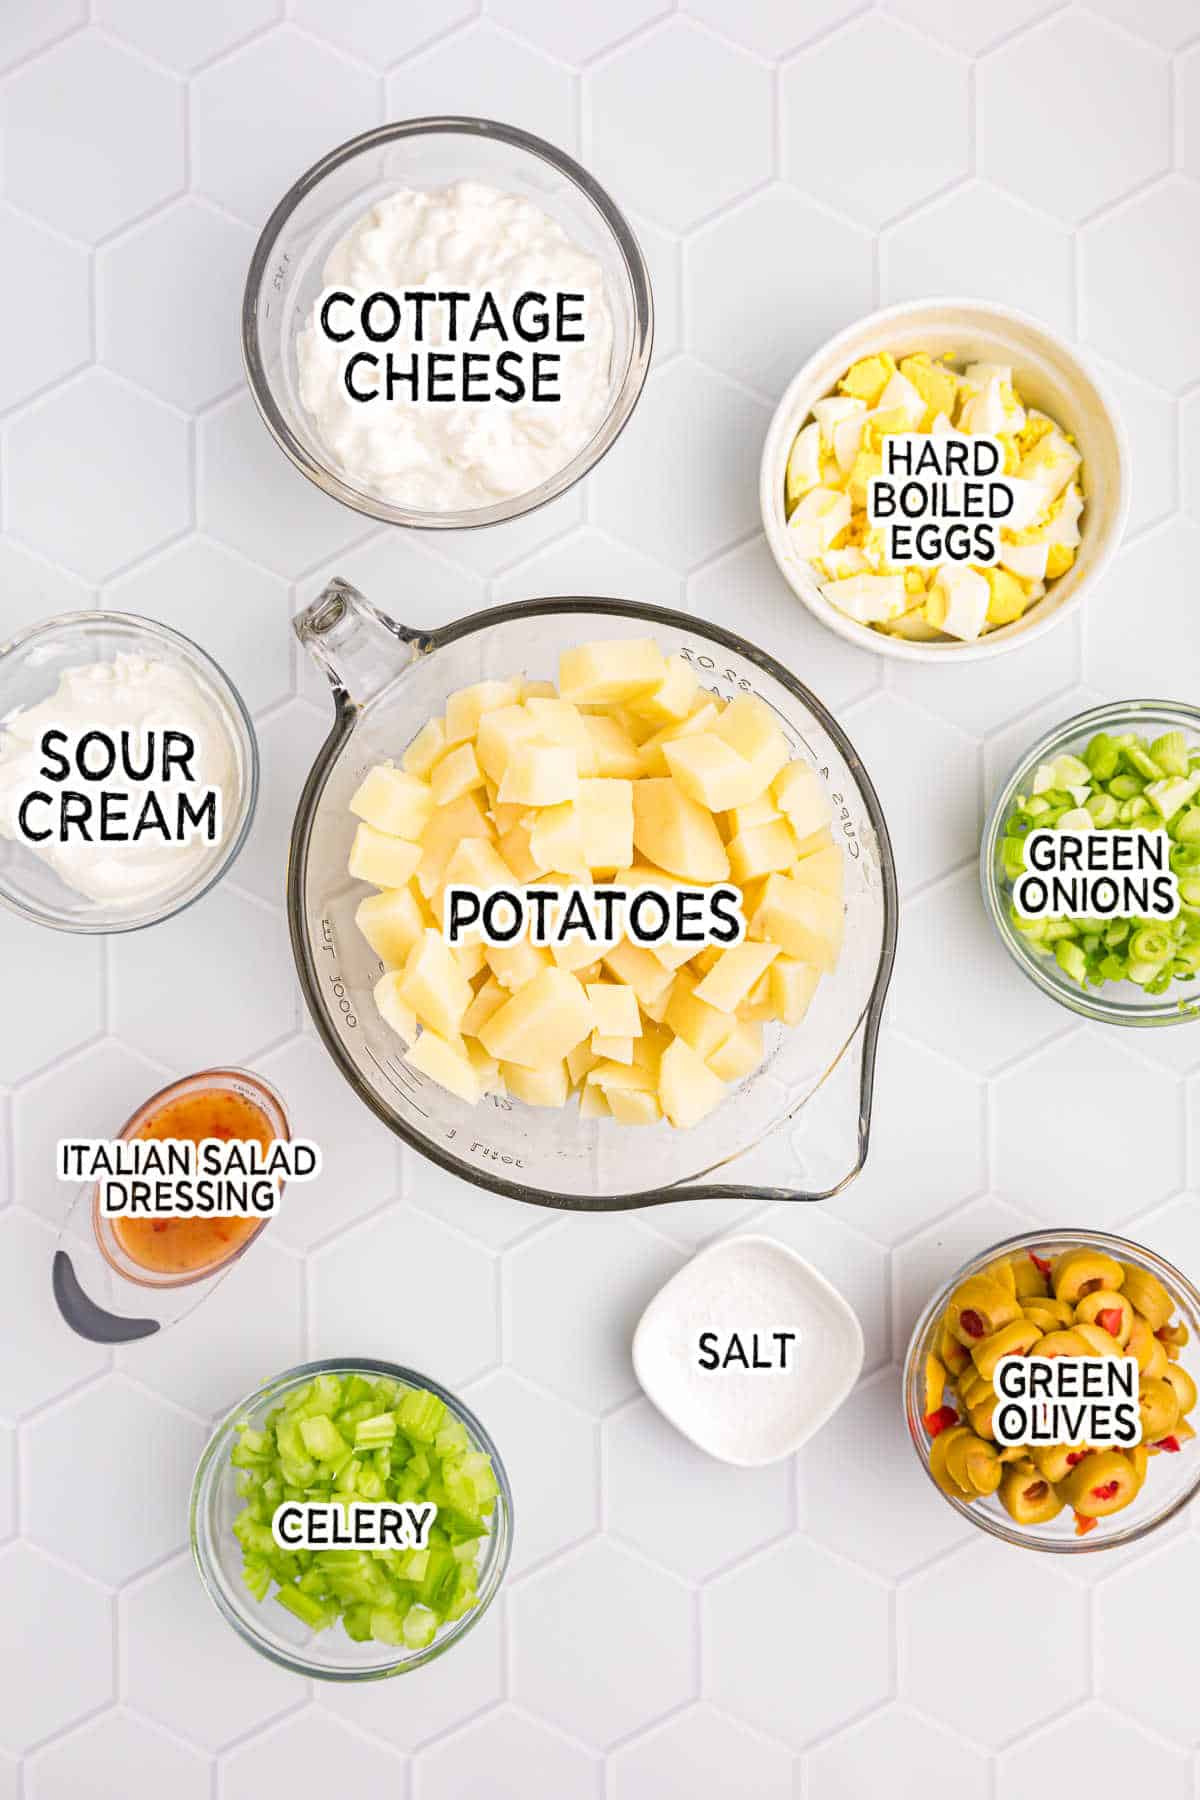 Cheese potato salad ingredients.